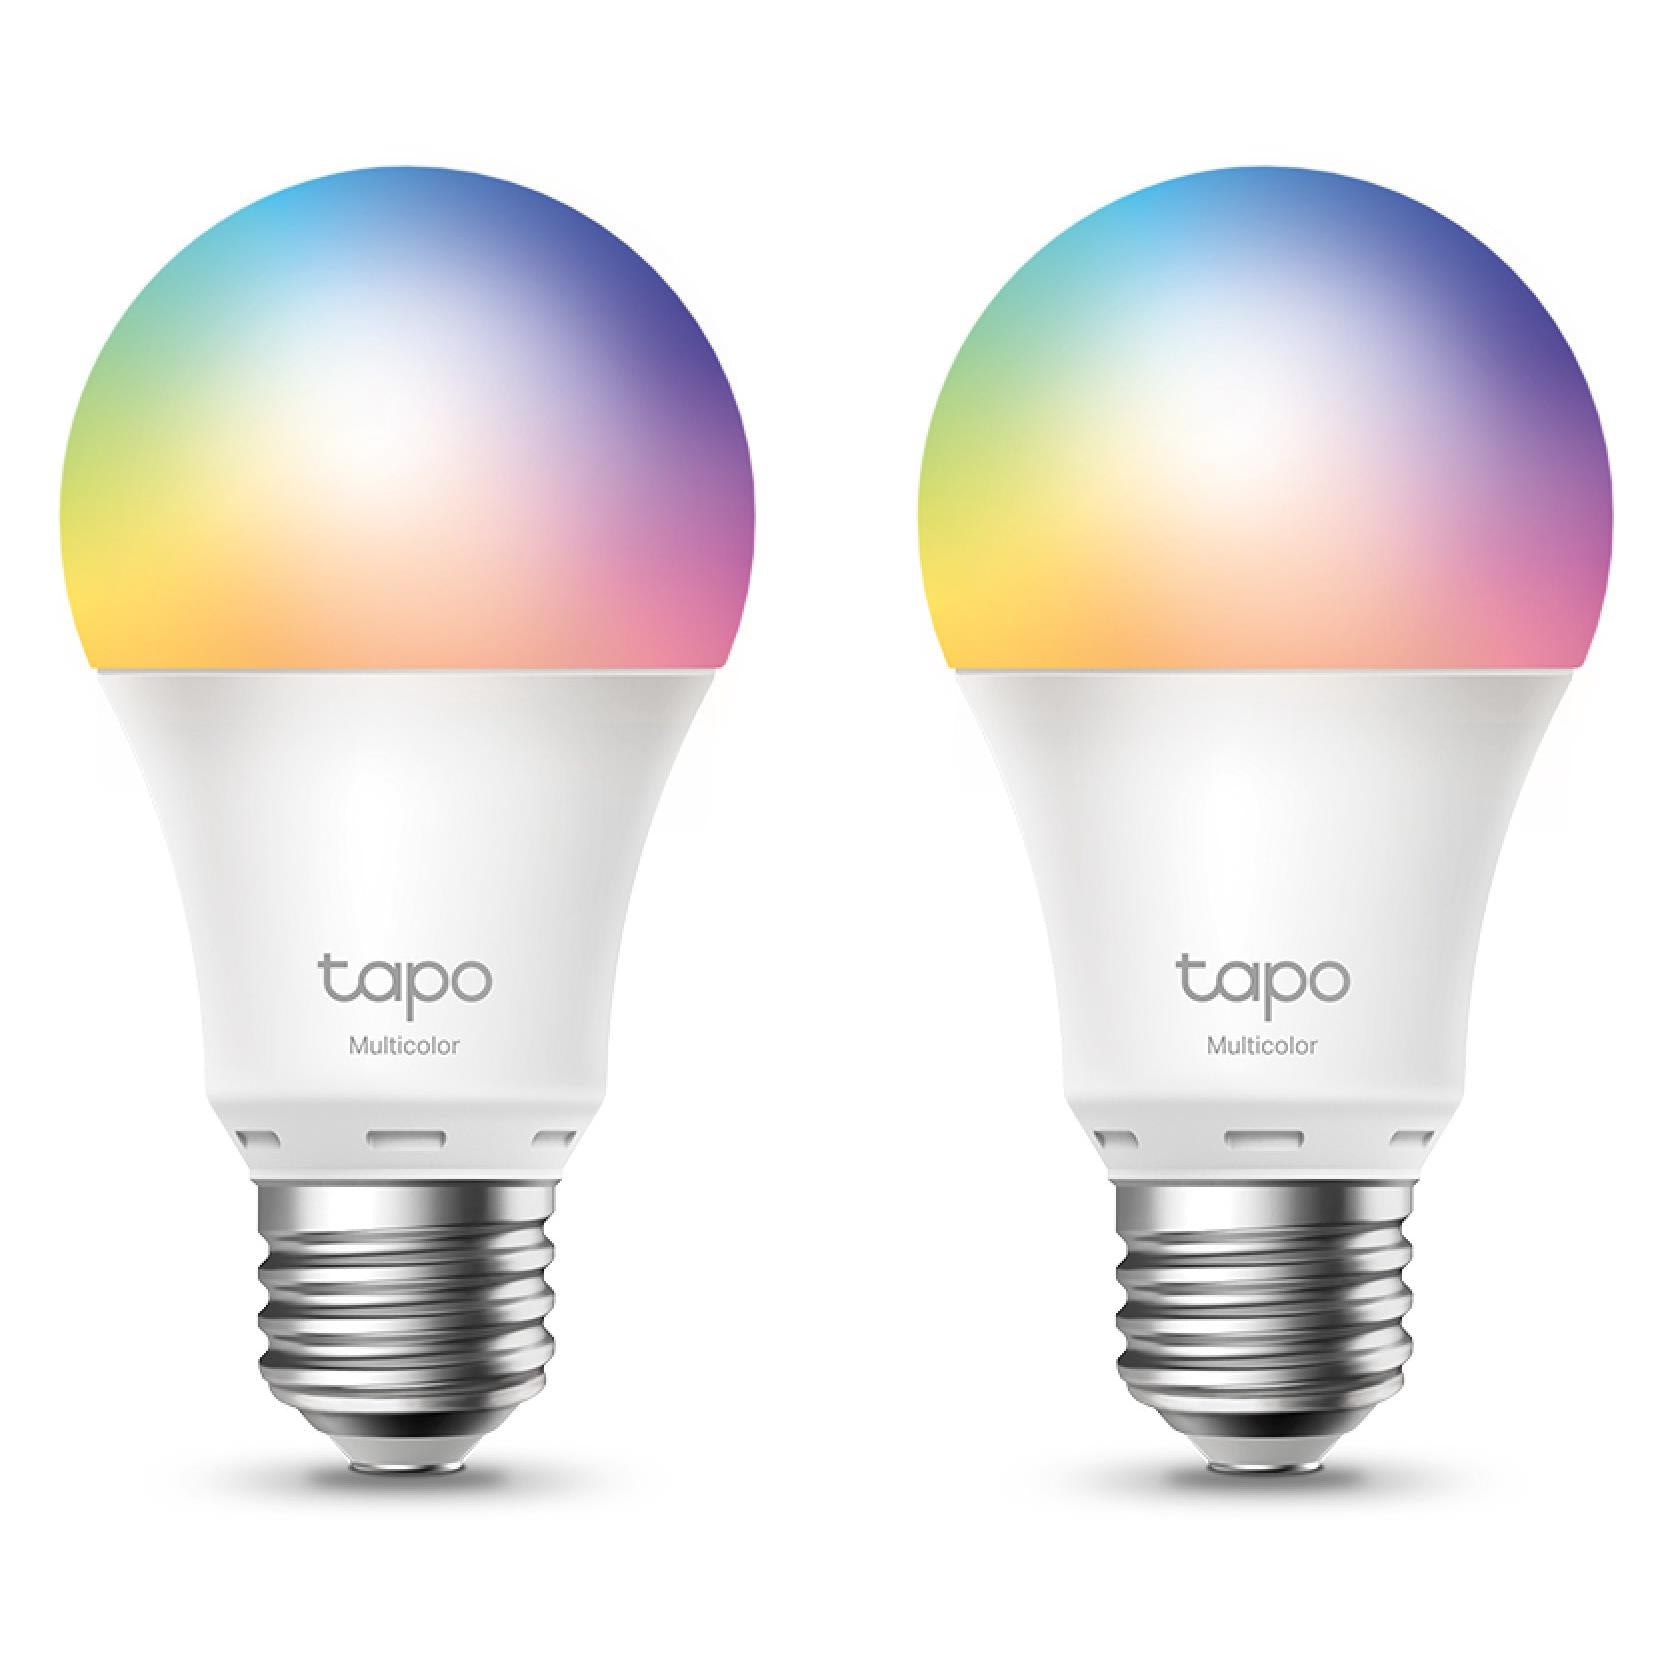 tp-link tapo smart wi-fi multicolour bulb (e27) [2-pack]